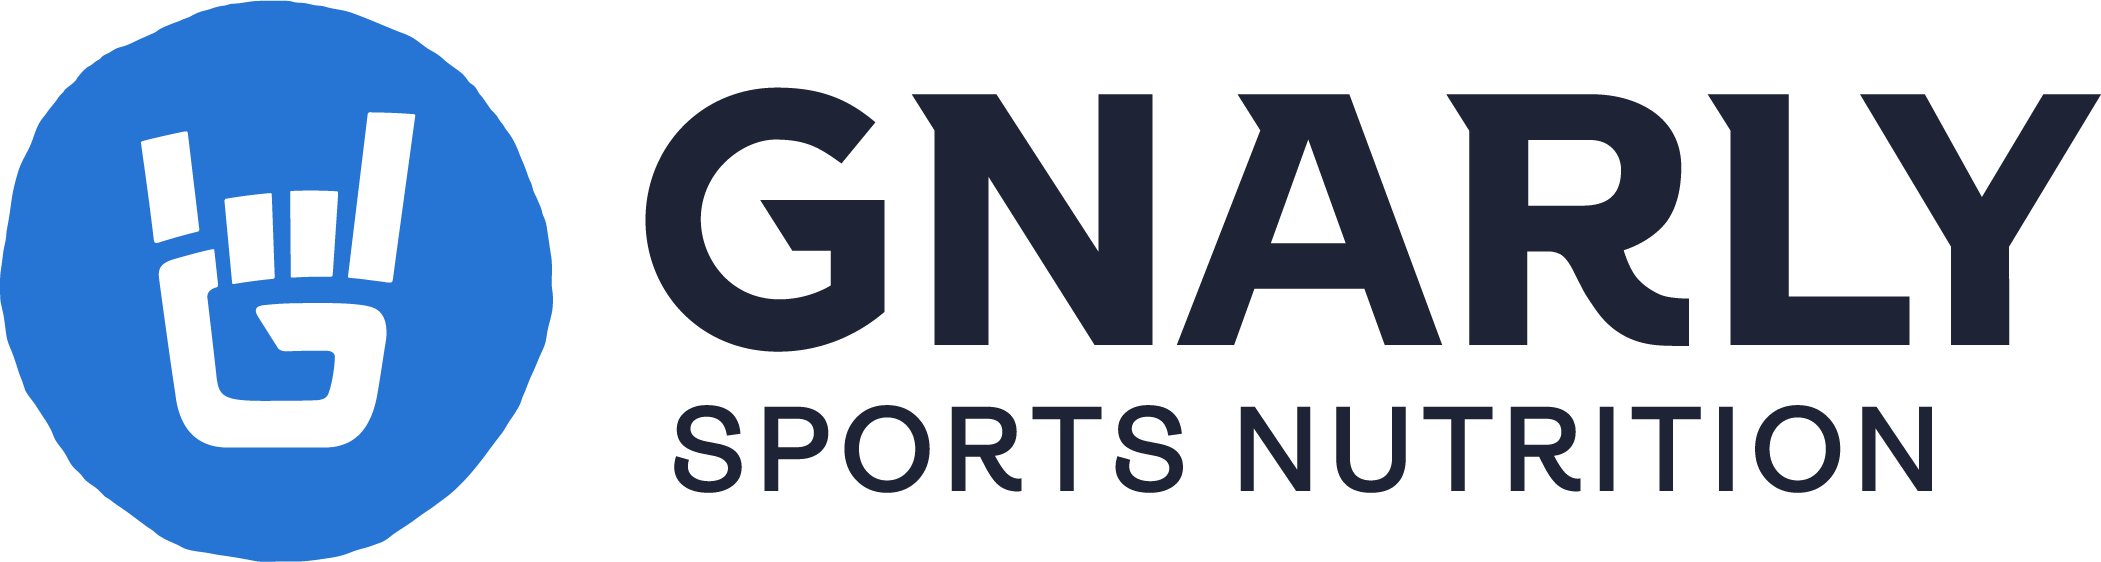 Gnarly Sports Nutrition logo